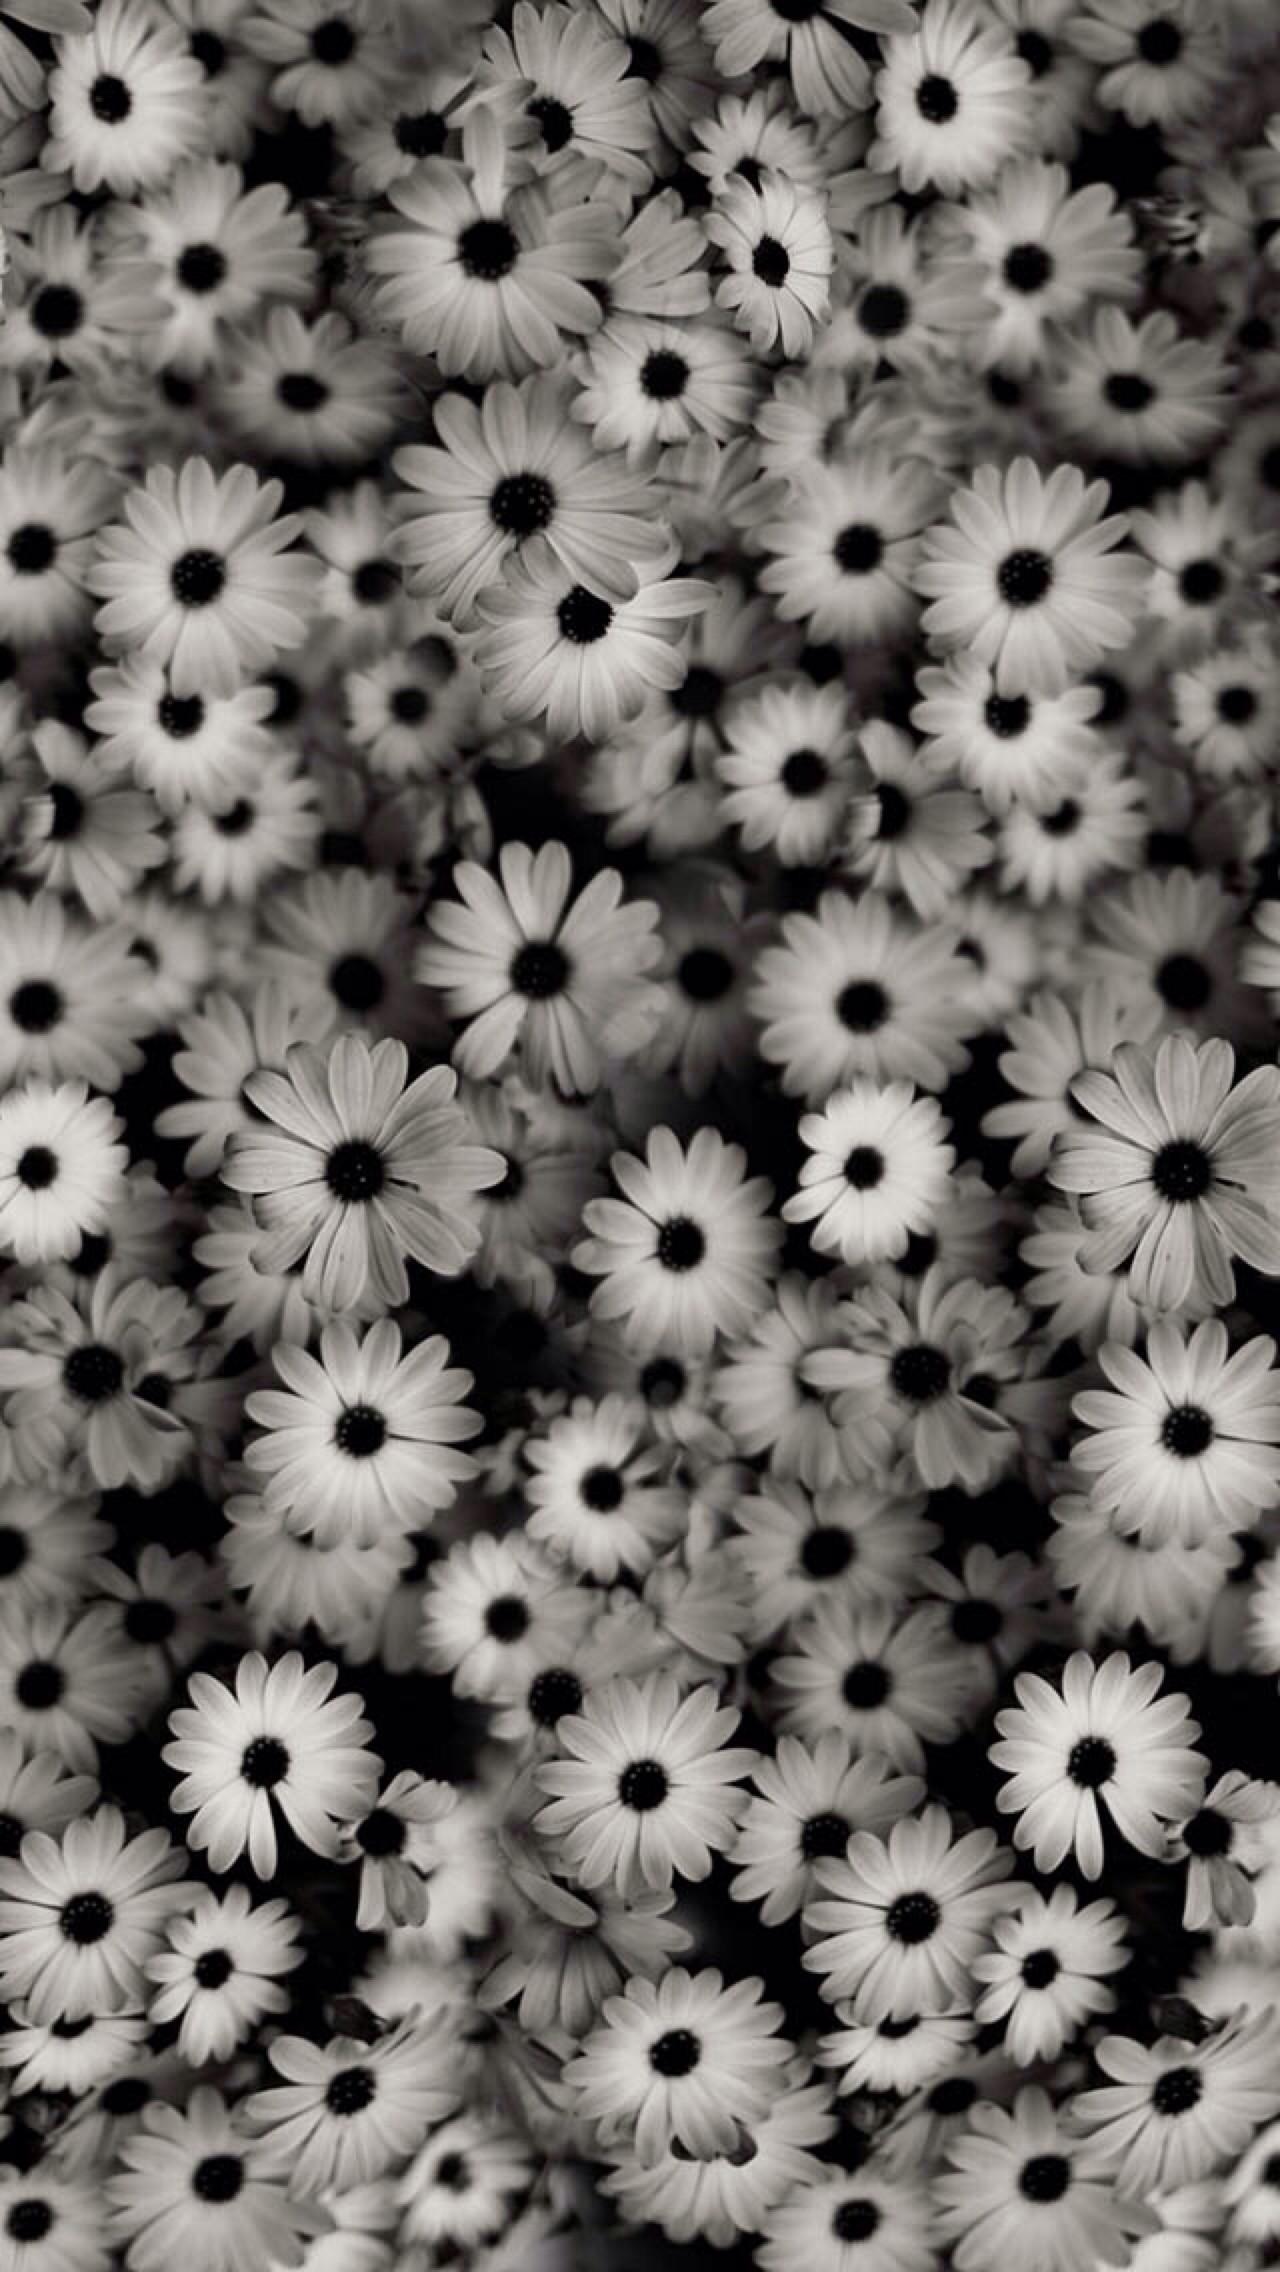 Flower Wallpaper Tumblr Black And White wengerluggagesave